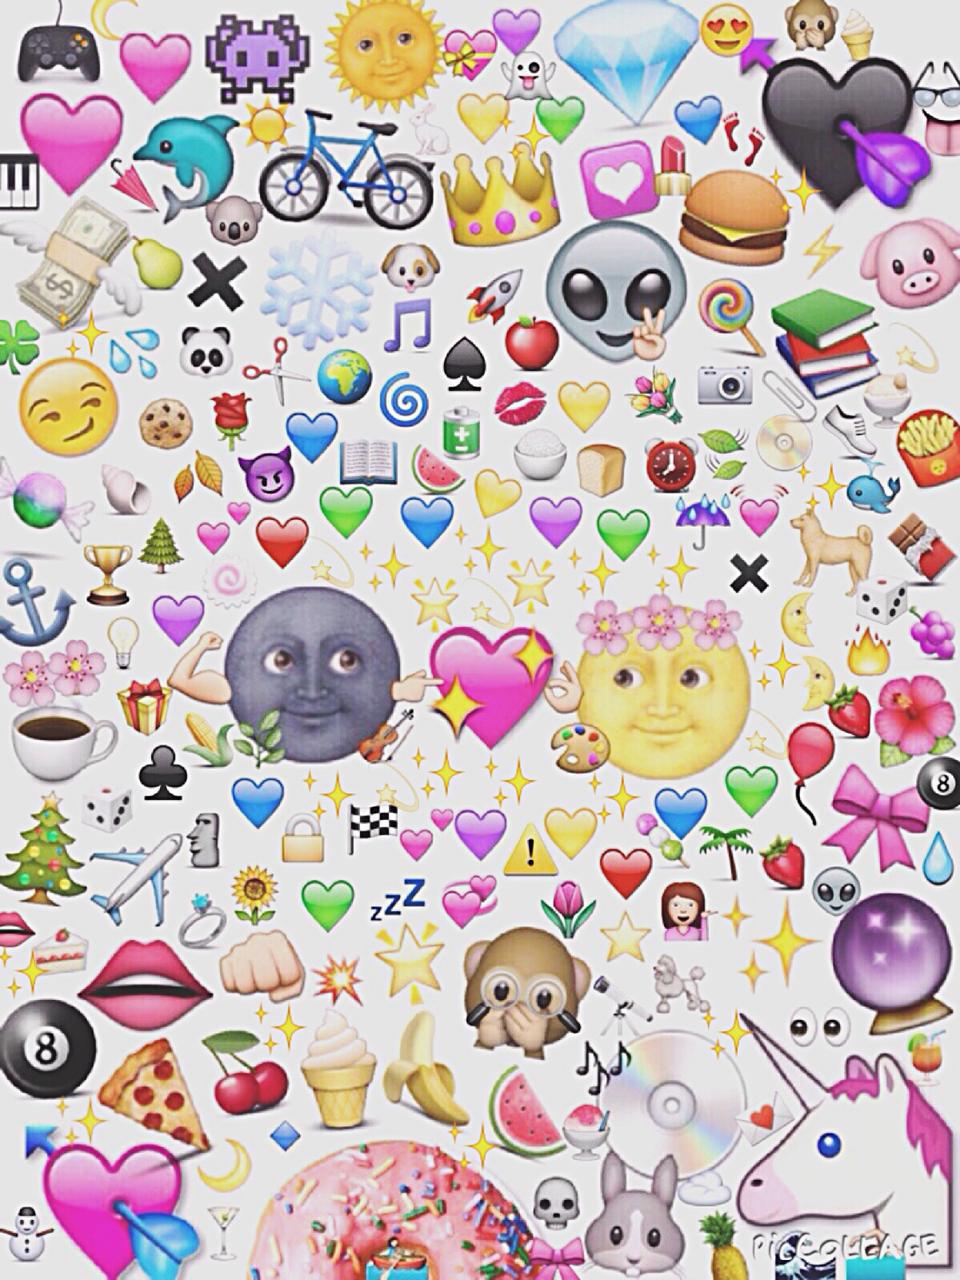 Emoji Background Wallpaper, Free Stock Wallpaper